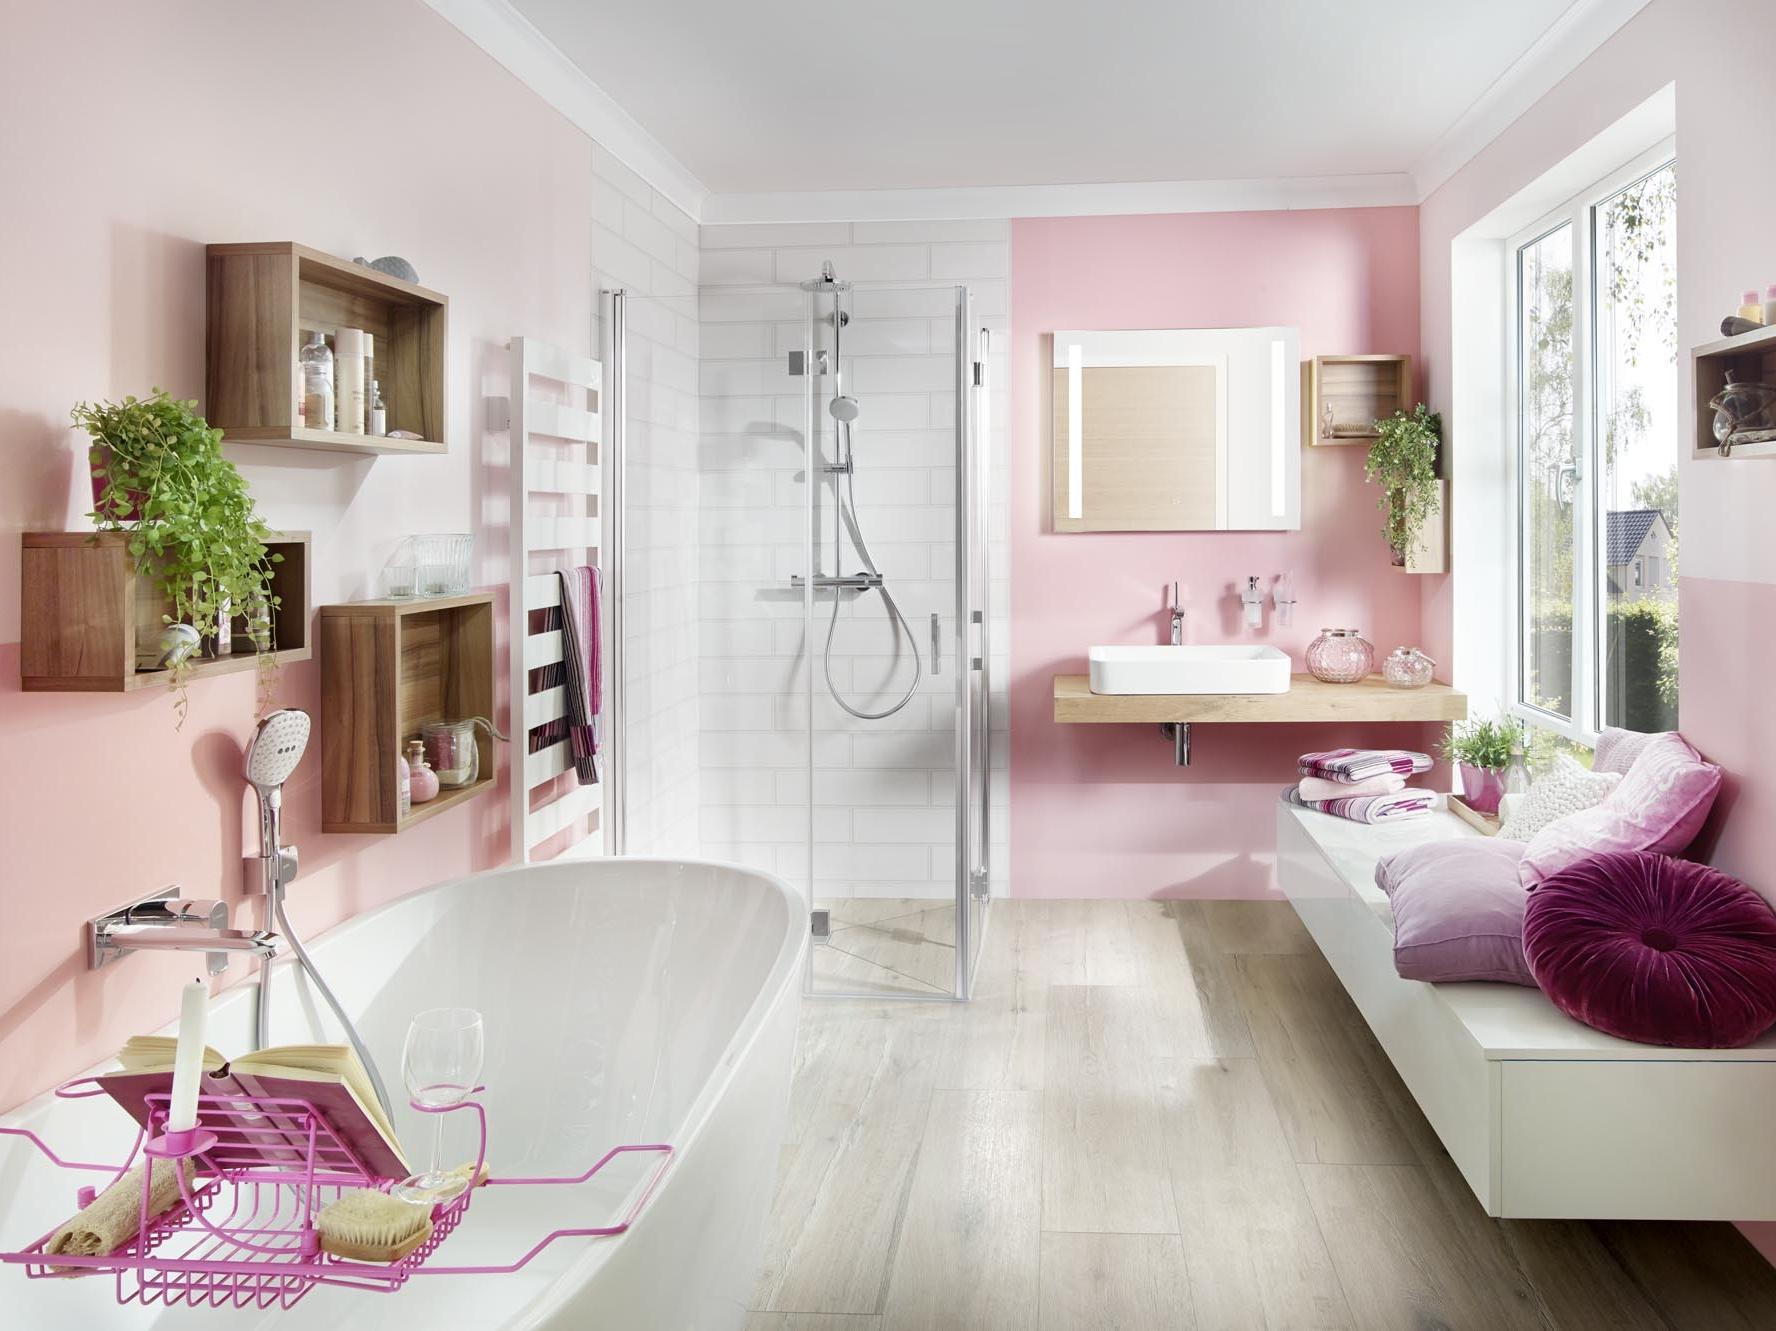 Kermi Inspiration bathroom with LIGA, POINT, and CASTEO